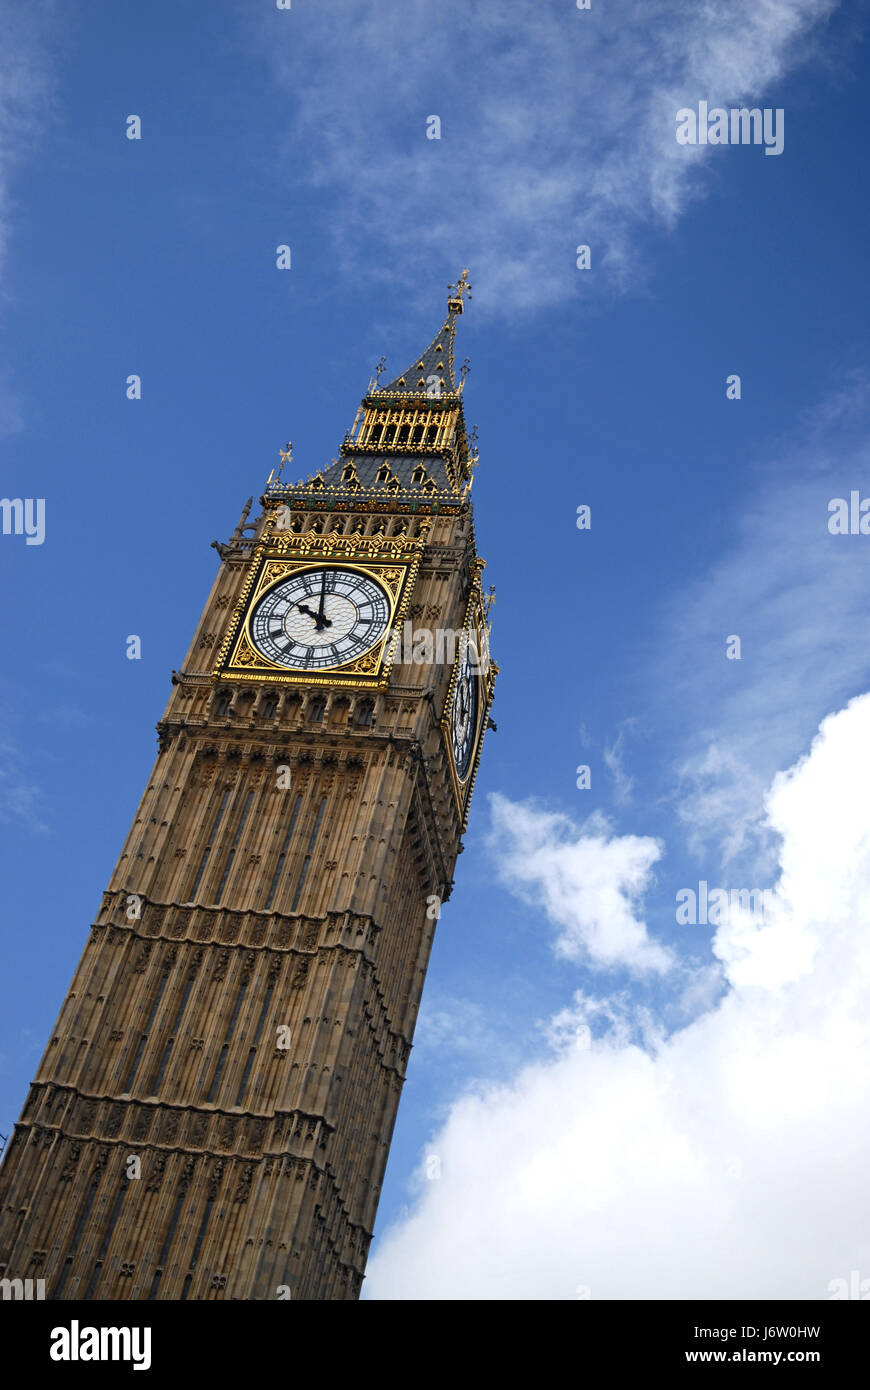 clock london england parliament emblem metropolis holiday vacation holidays Stock Photo